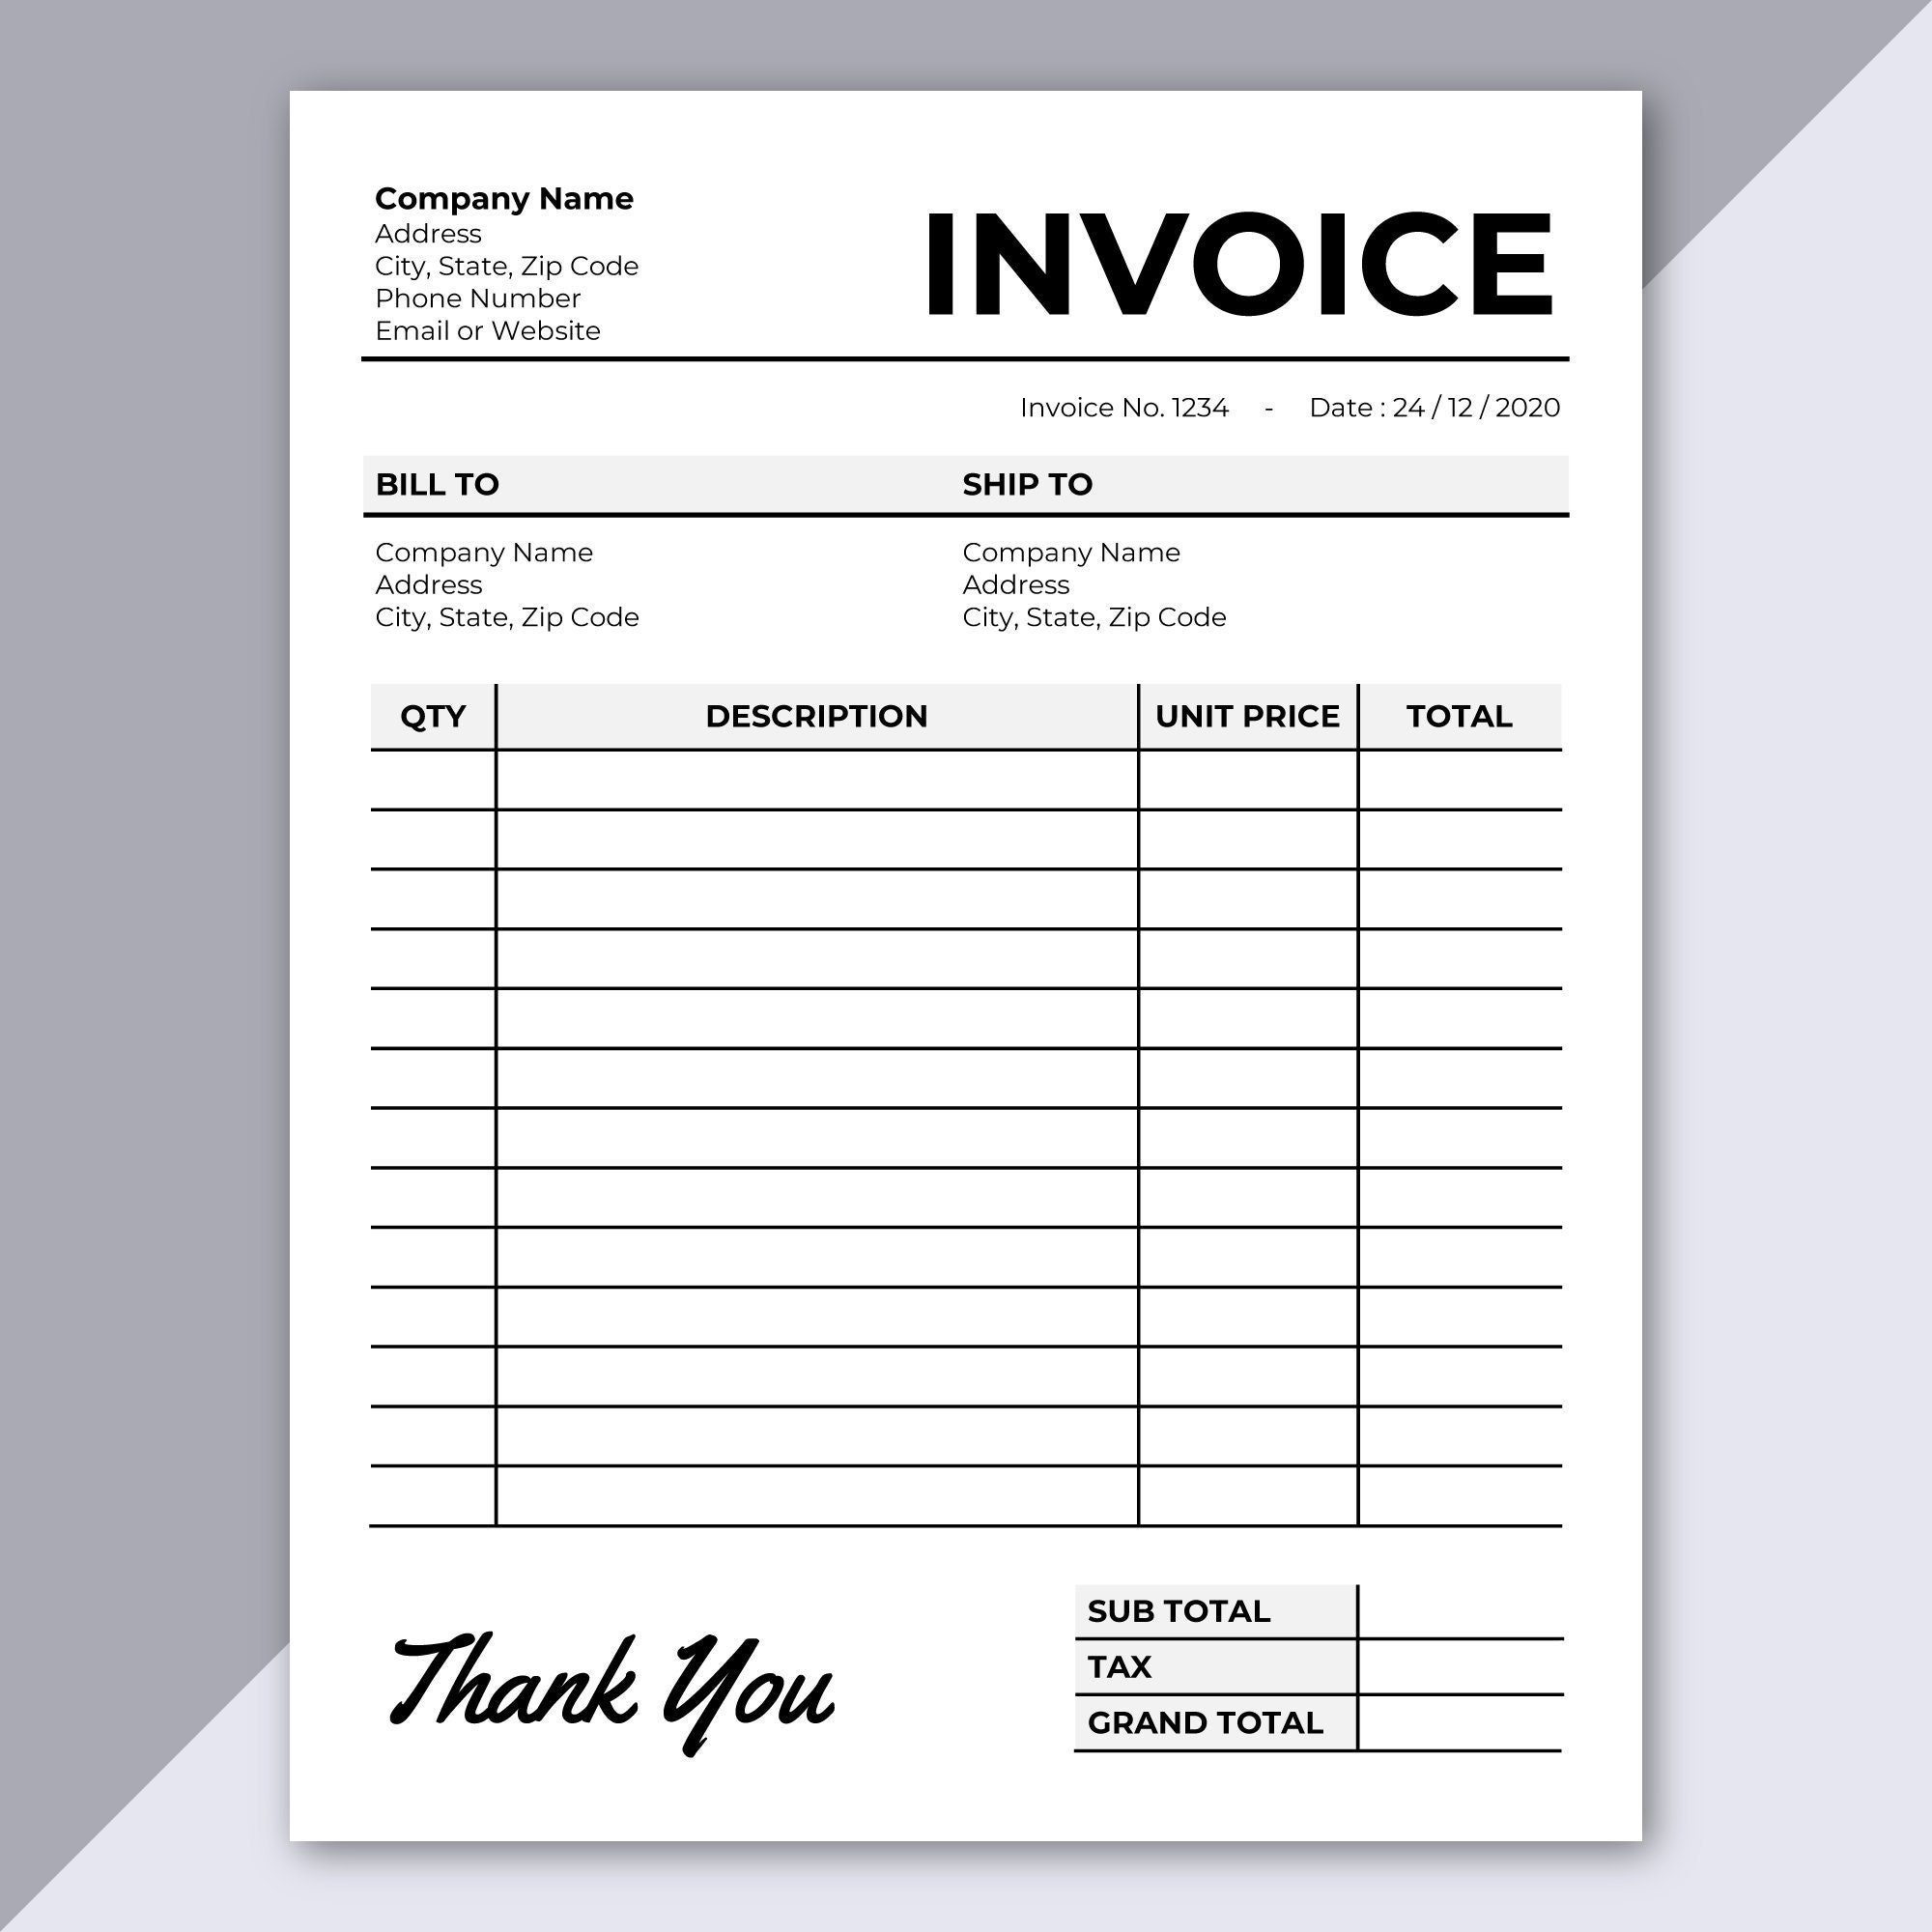 Invoice Template Printable Invoice Business Form Editable Invoice Receipt Microsoft Invoice